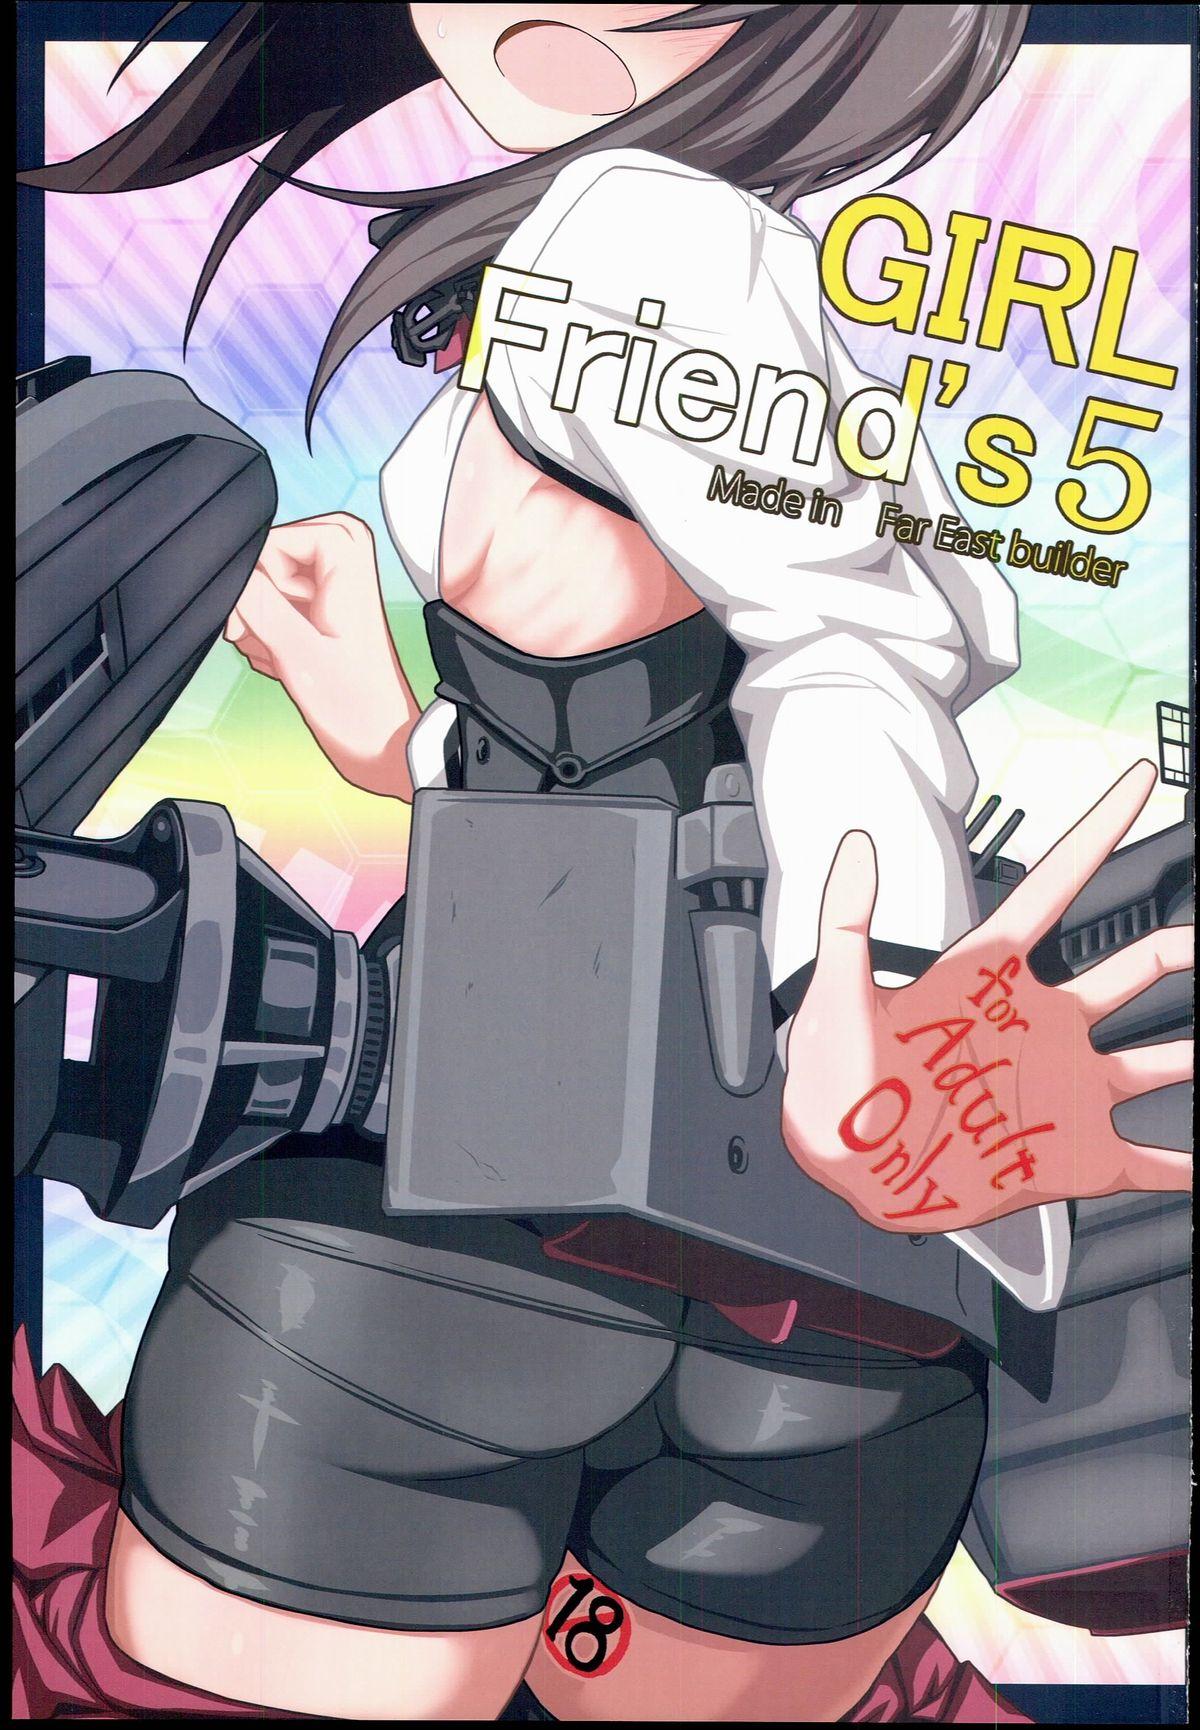 GIRLFriend's 5 0